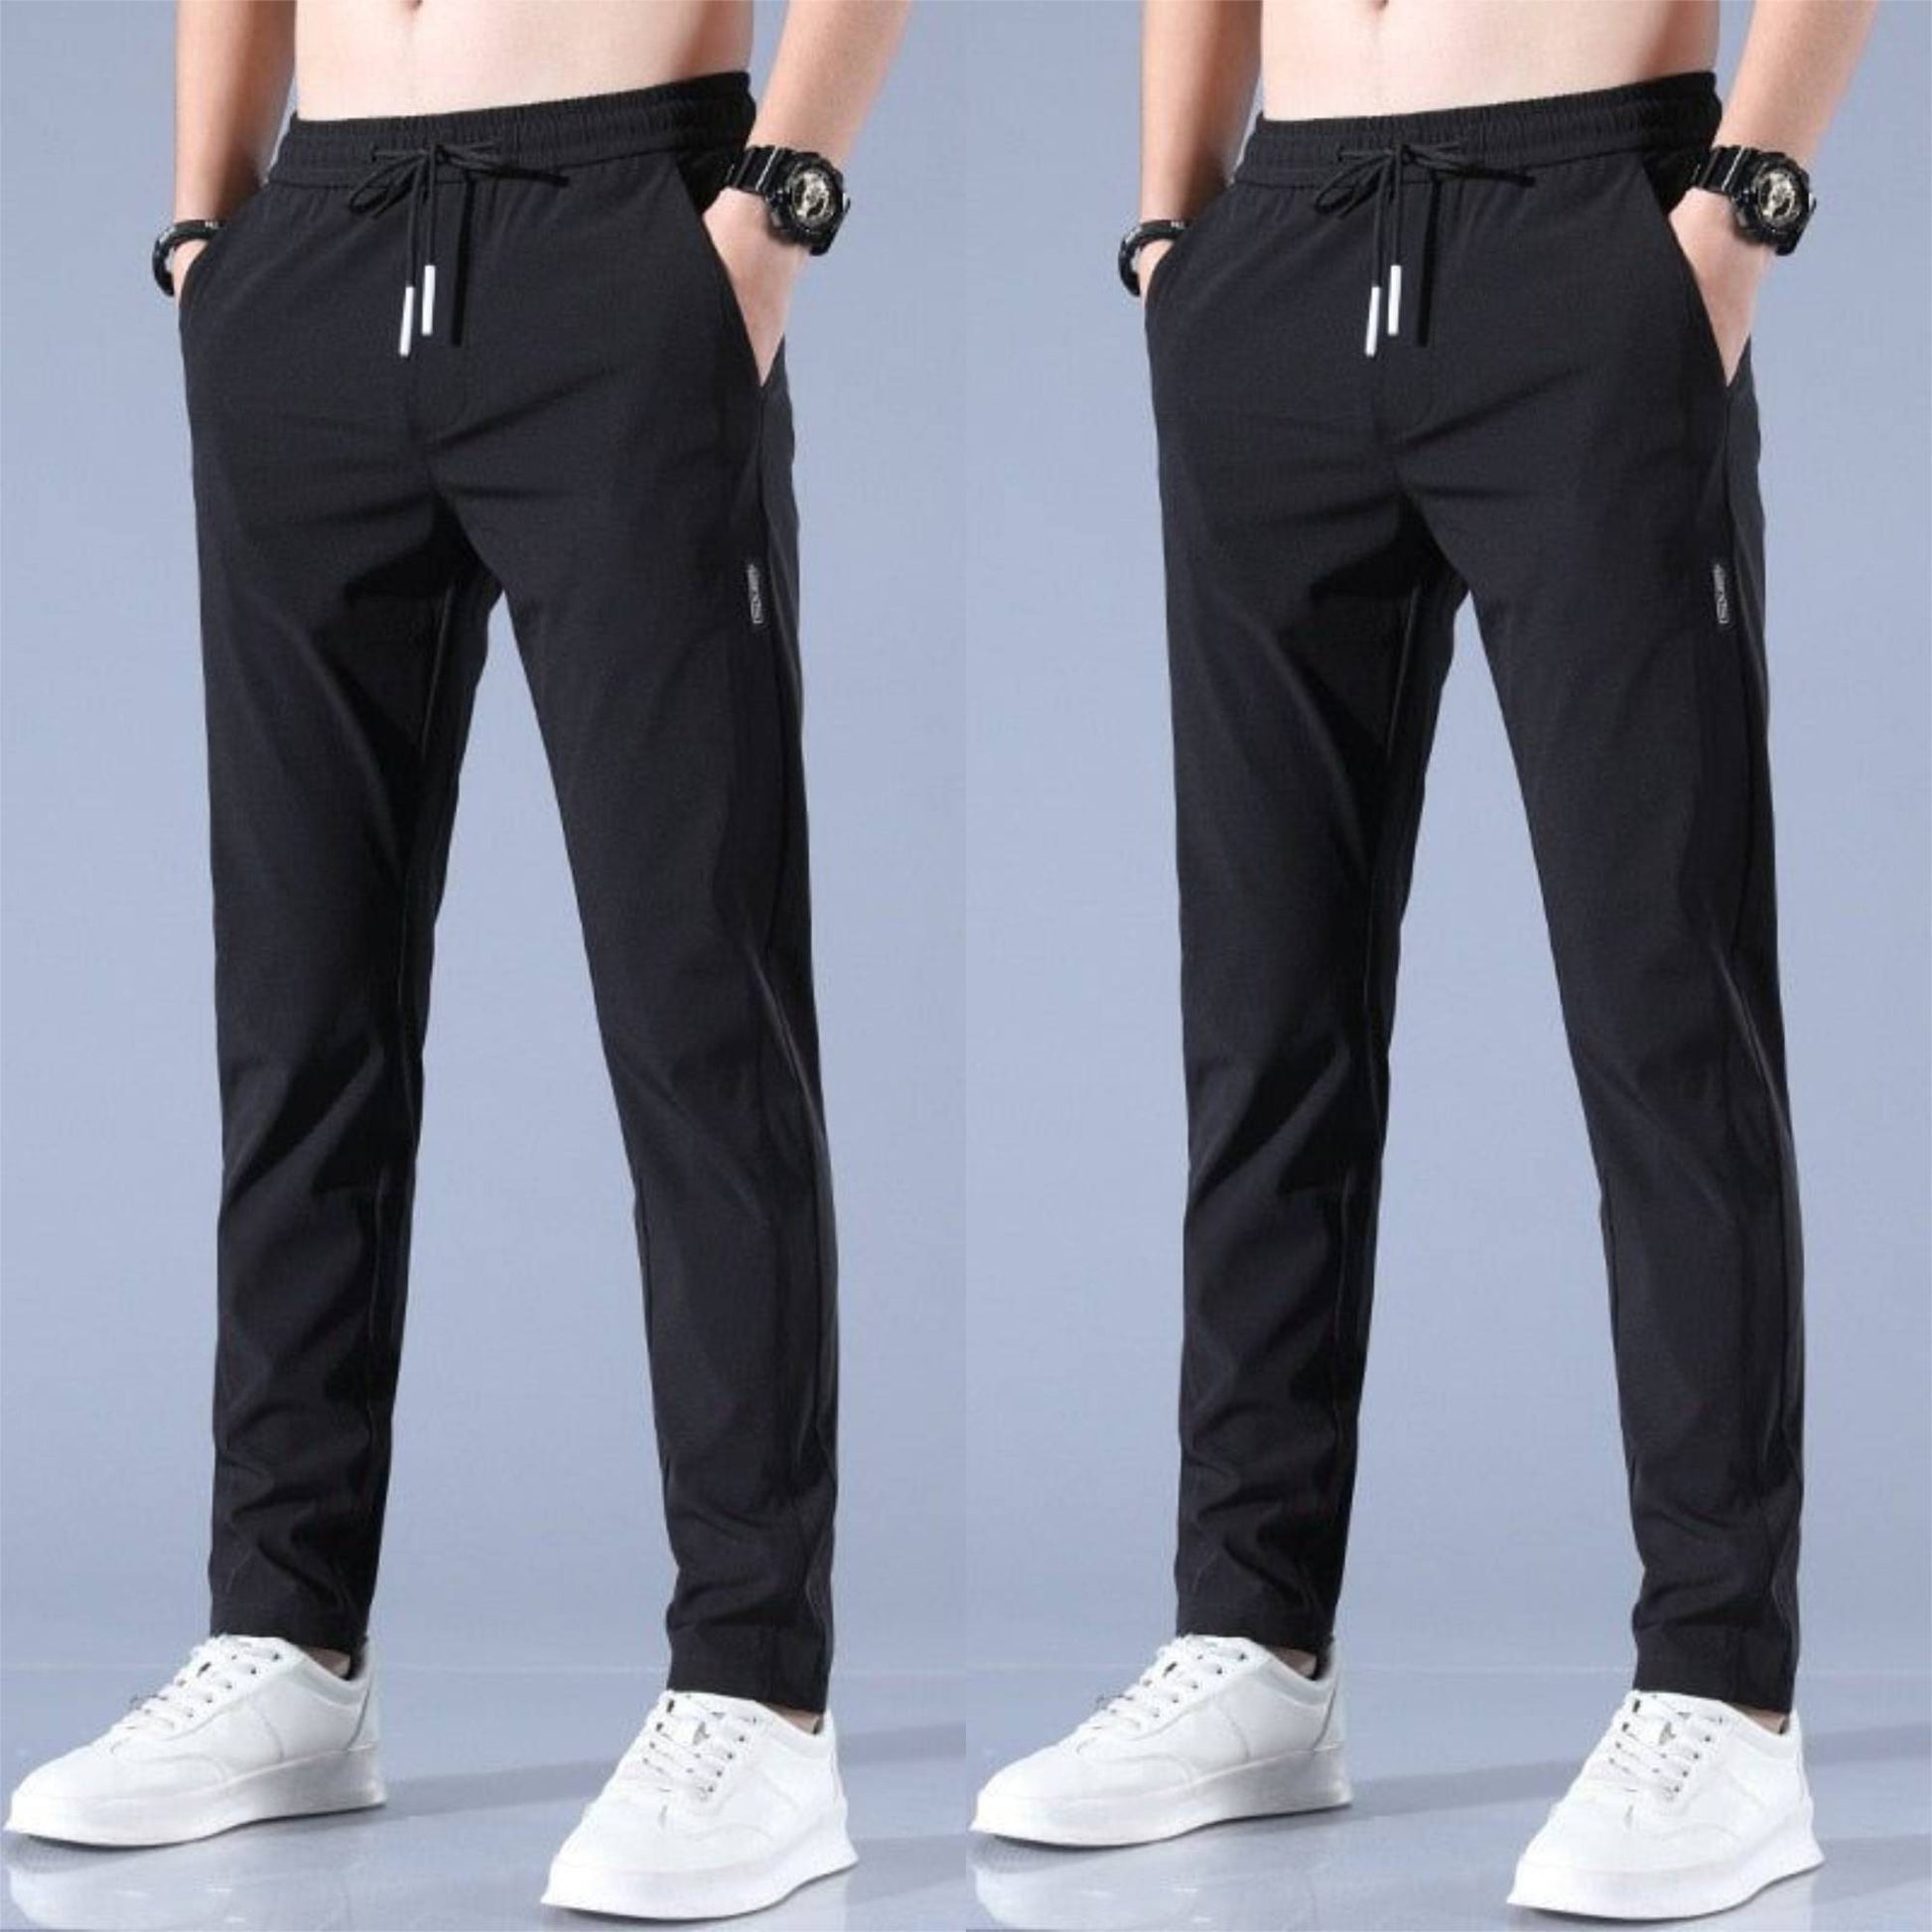 Stefan | SpeedDry Flexible Pants (1+1 FREE) - Black / Black / L - AMVIM